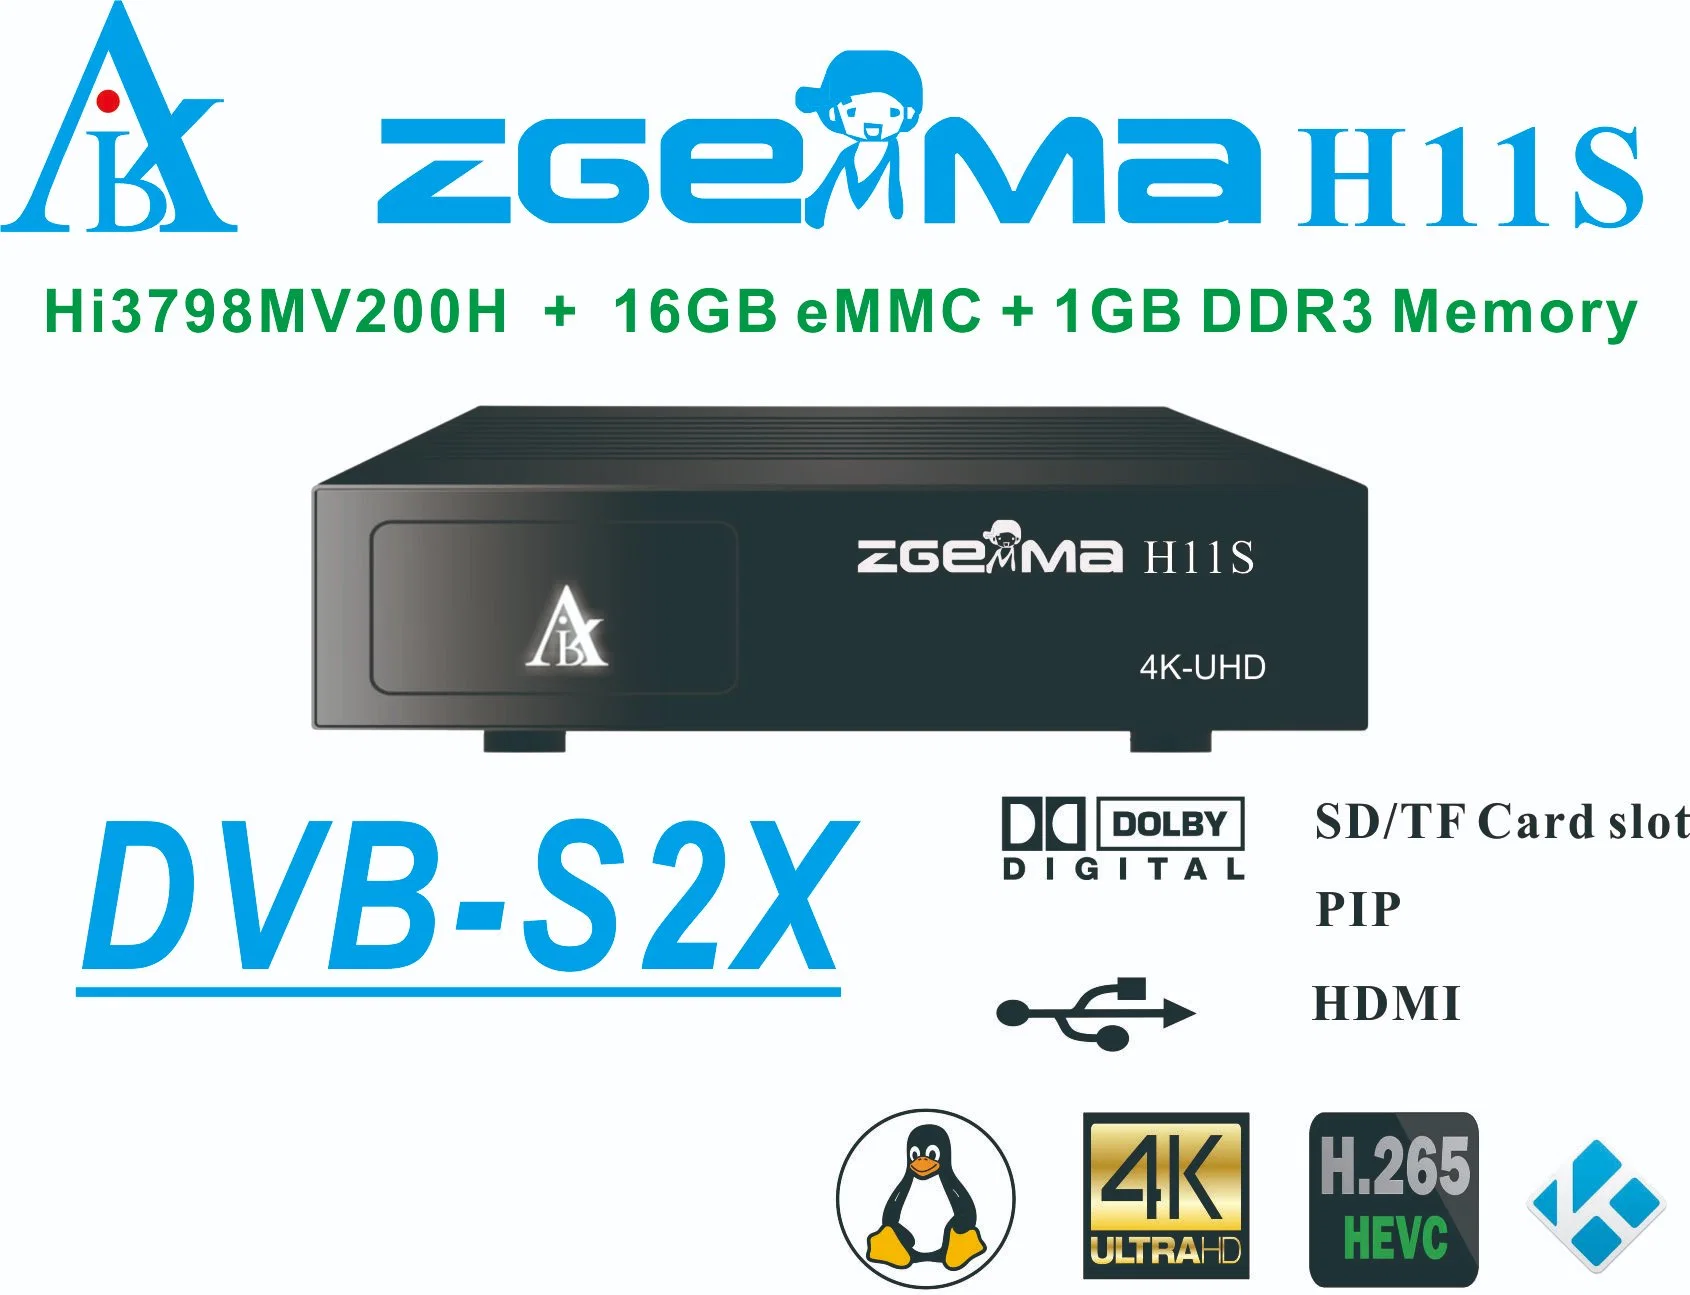 Zgemmah11s 4K- 2160p Linux Betriebssystem Digital Satellite TV Receiver